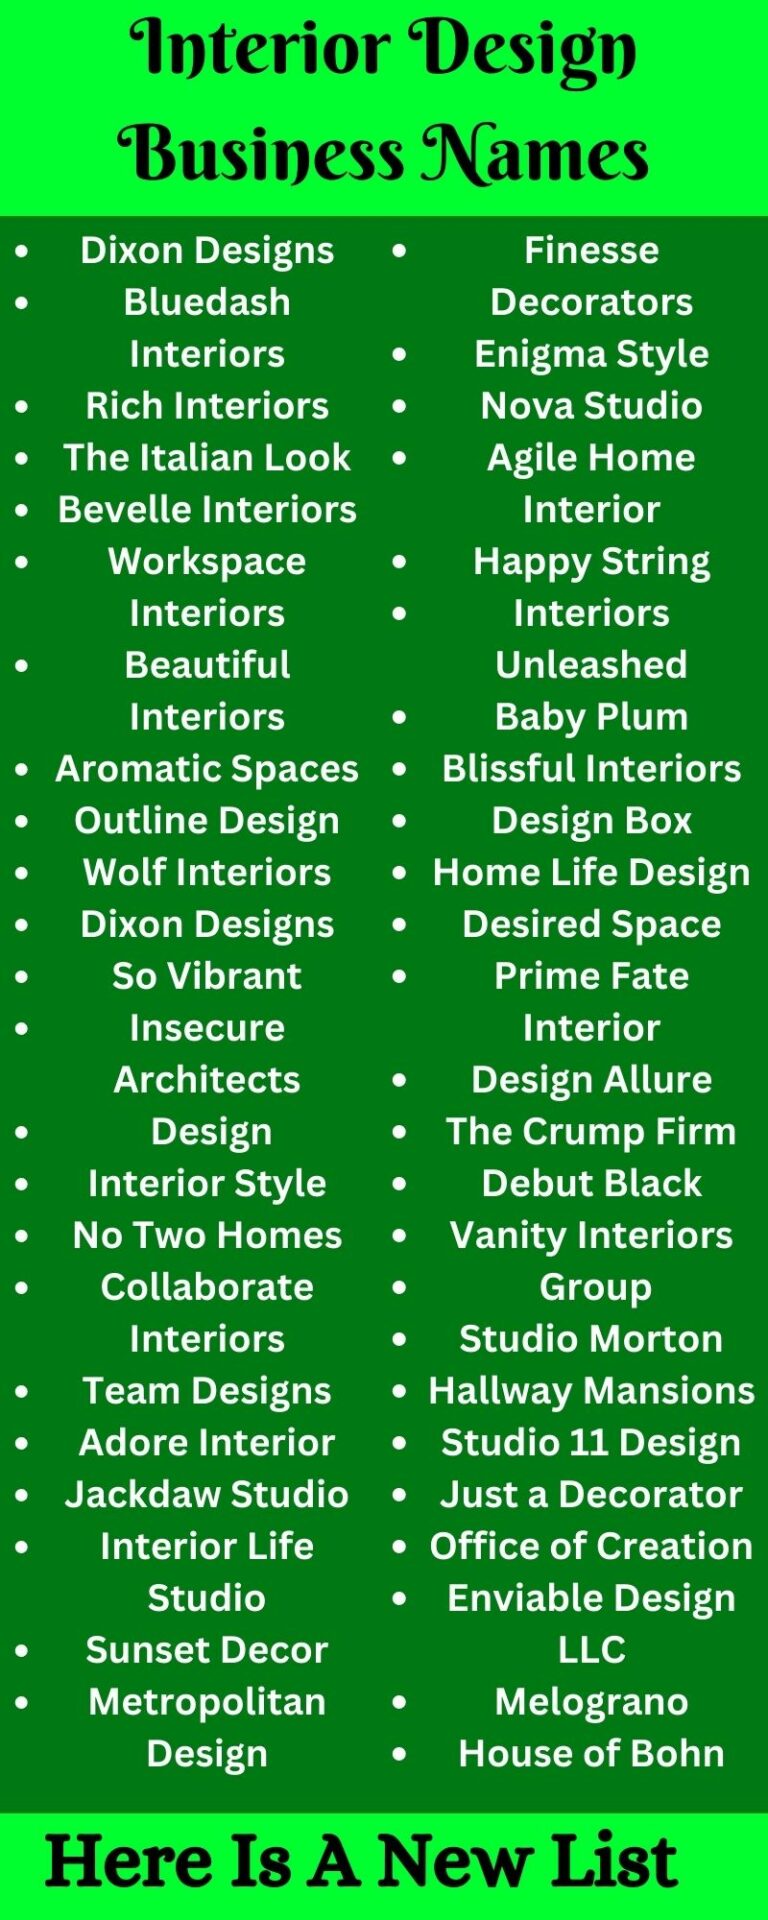 Interior Design Business Names.2 1 768x1920 